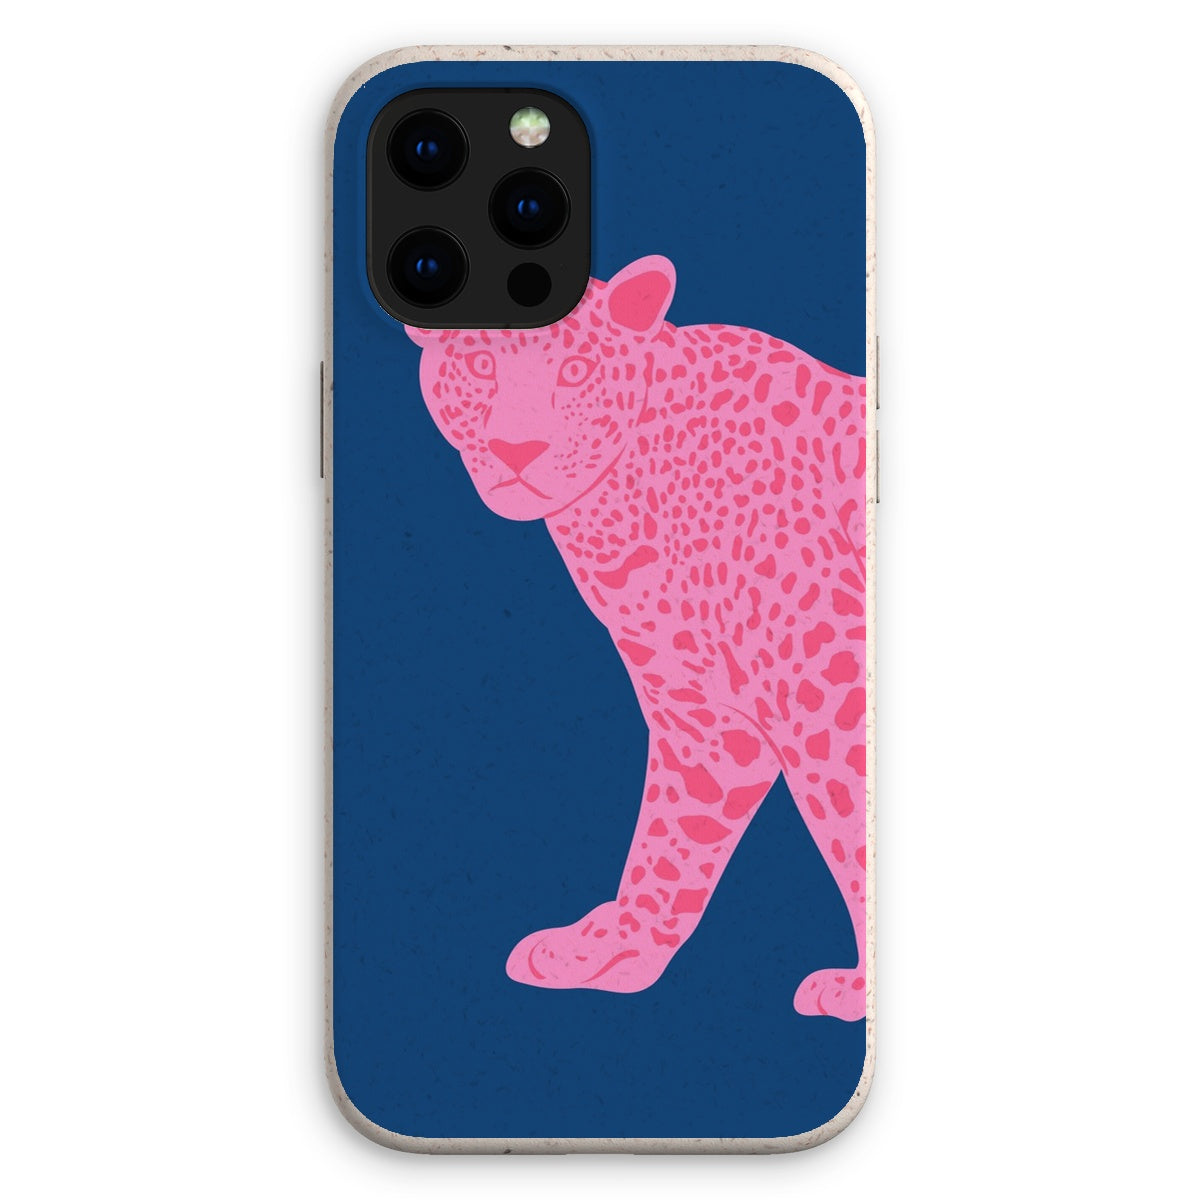 Biodegradable anti-shock phone case - Pink panther